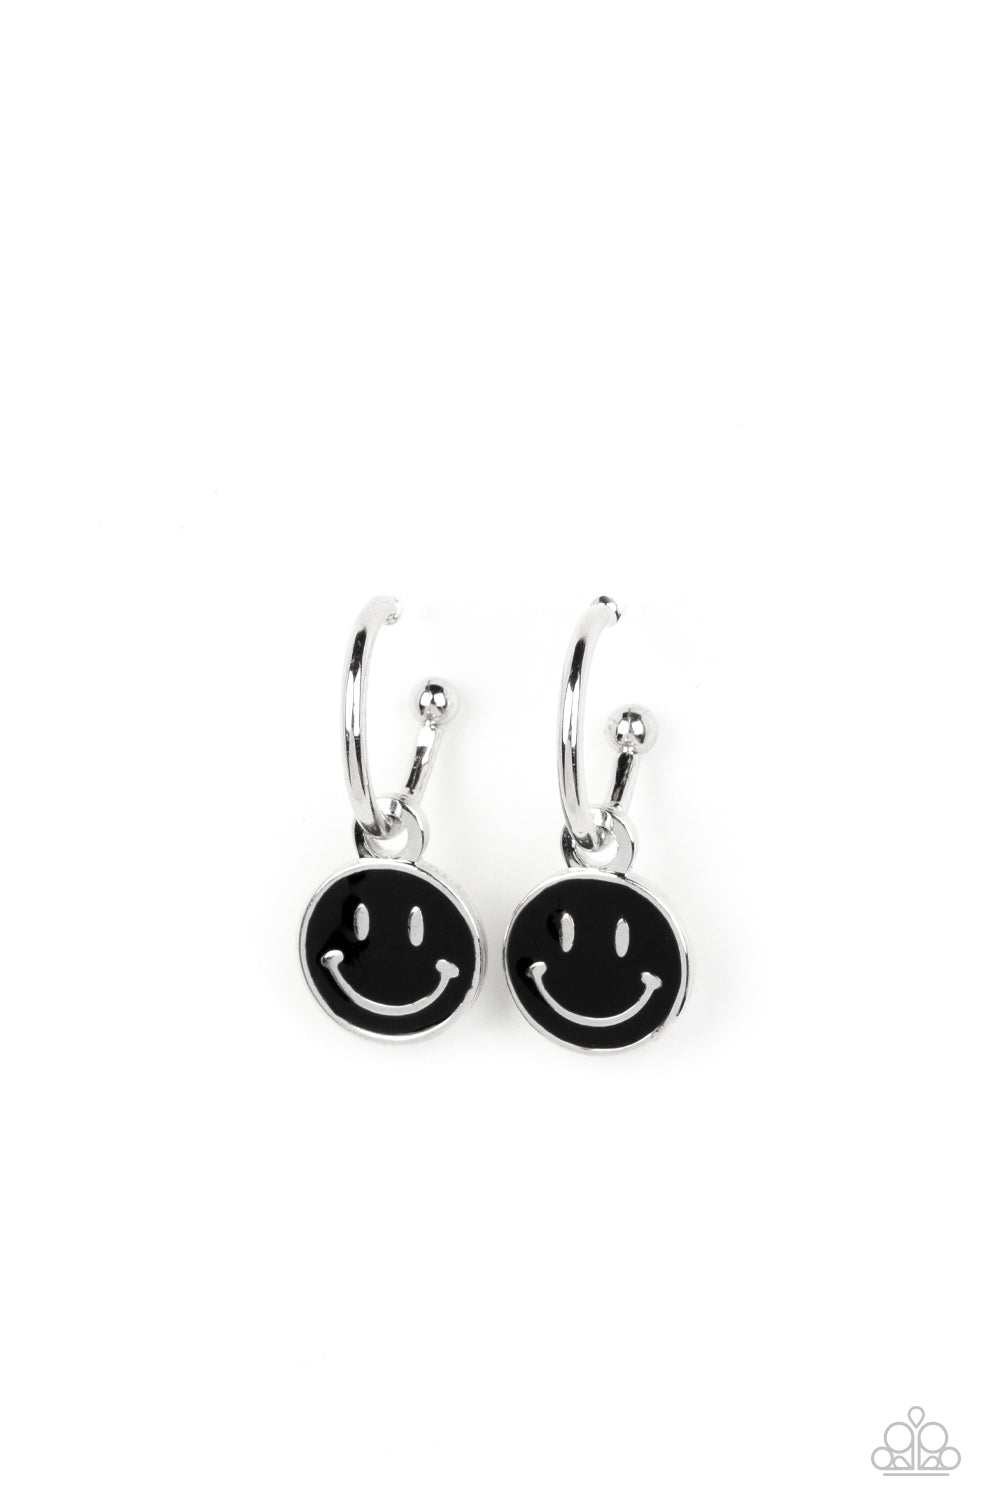 Subtle Smile - Black Earrings